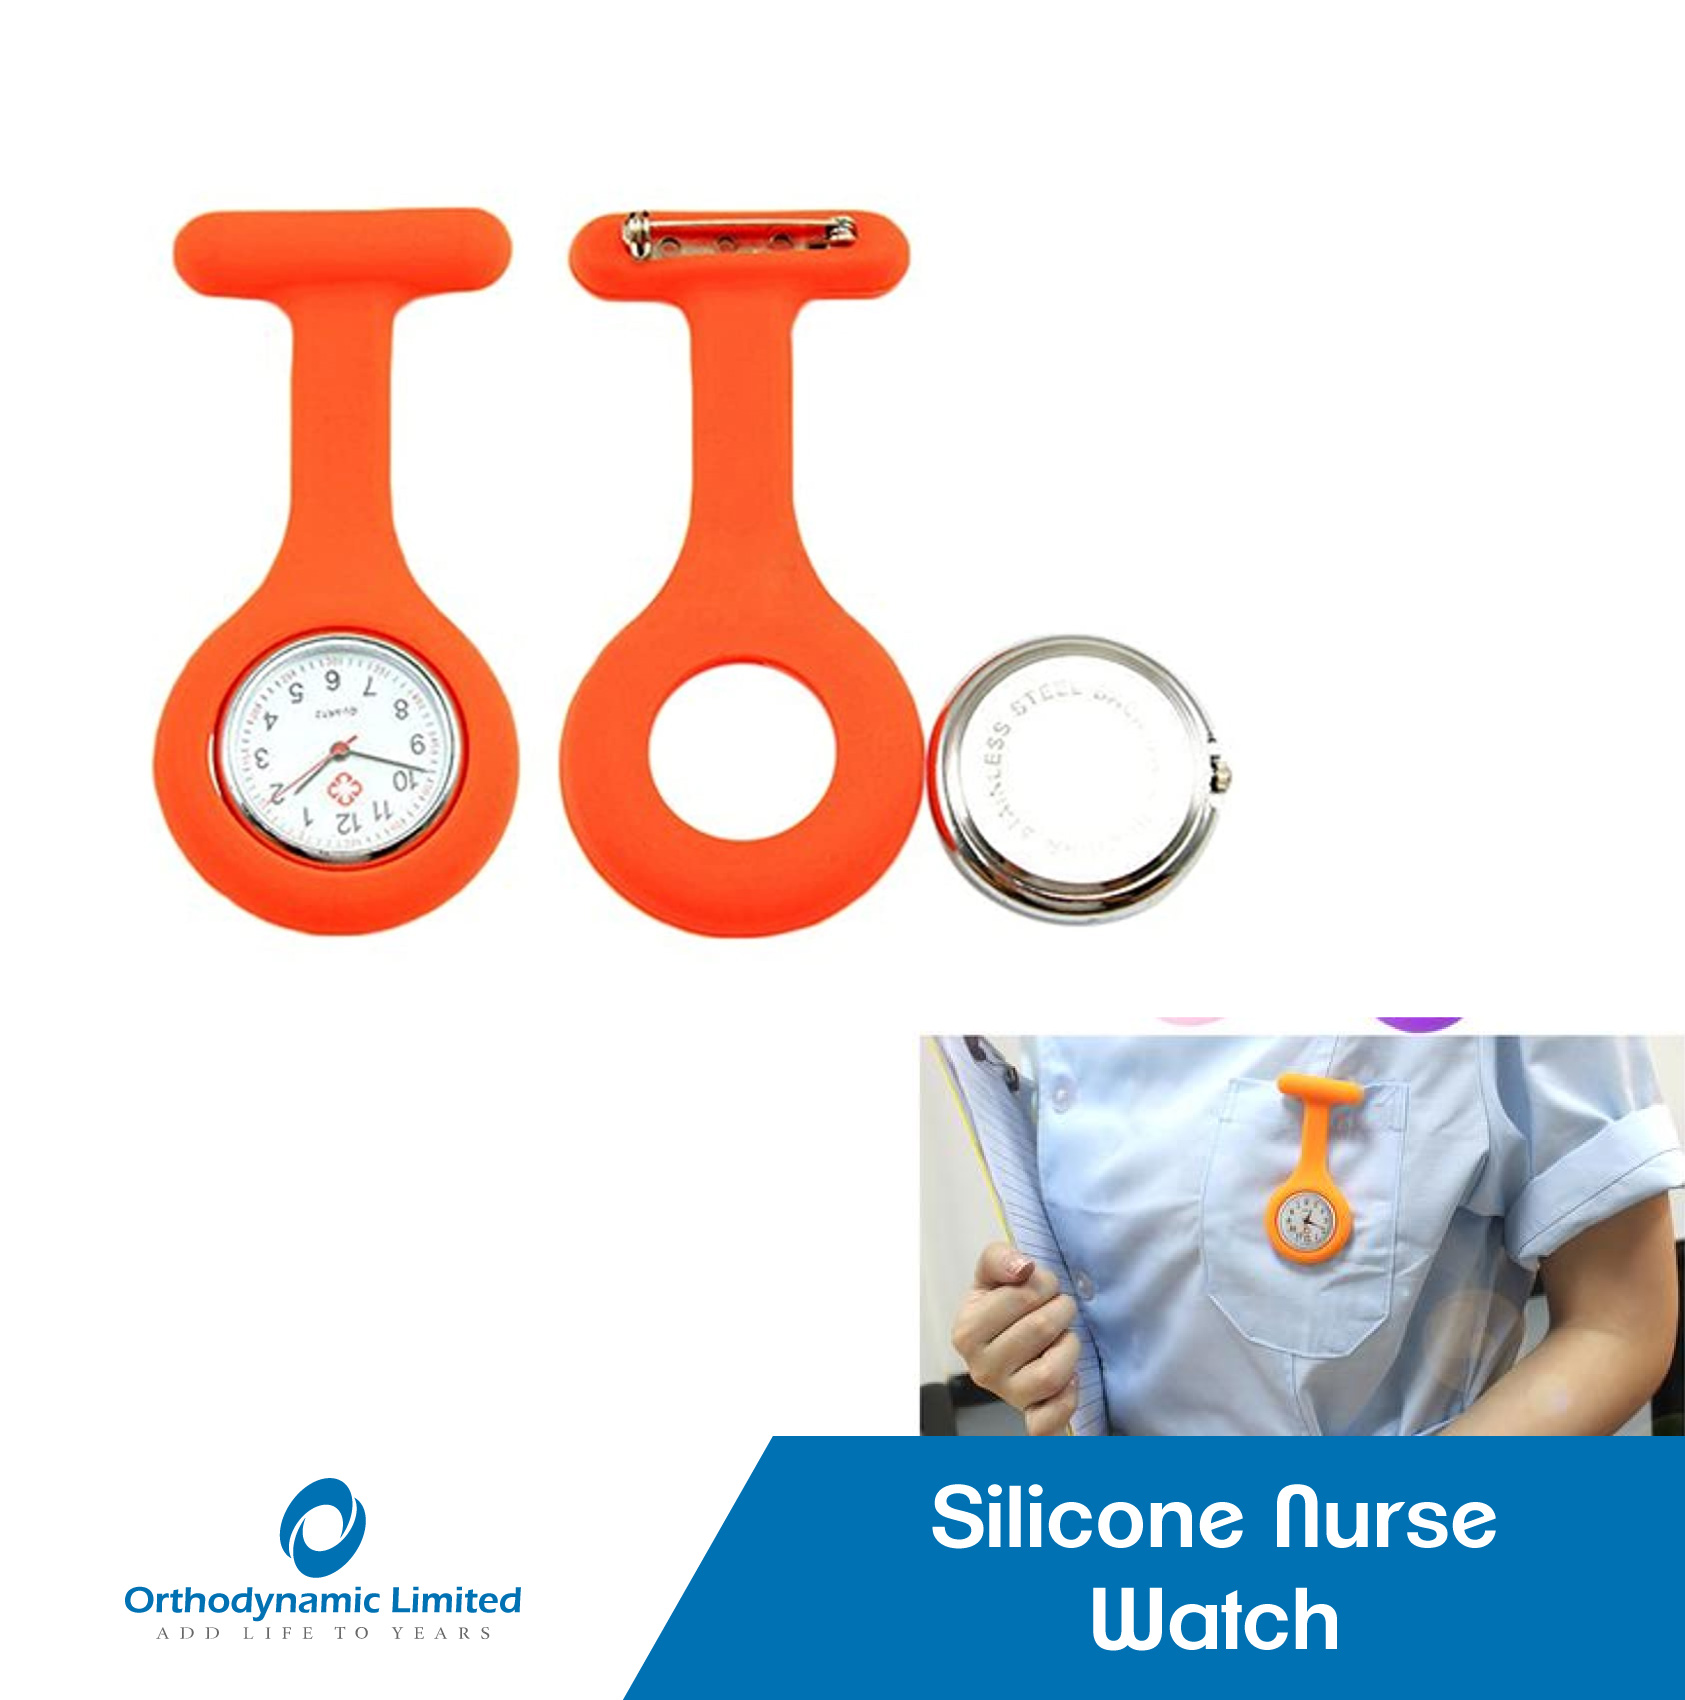 Silicone nurse watch